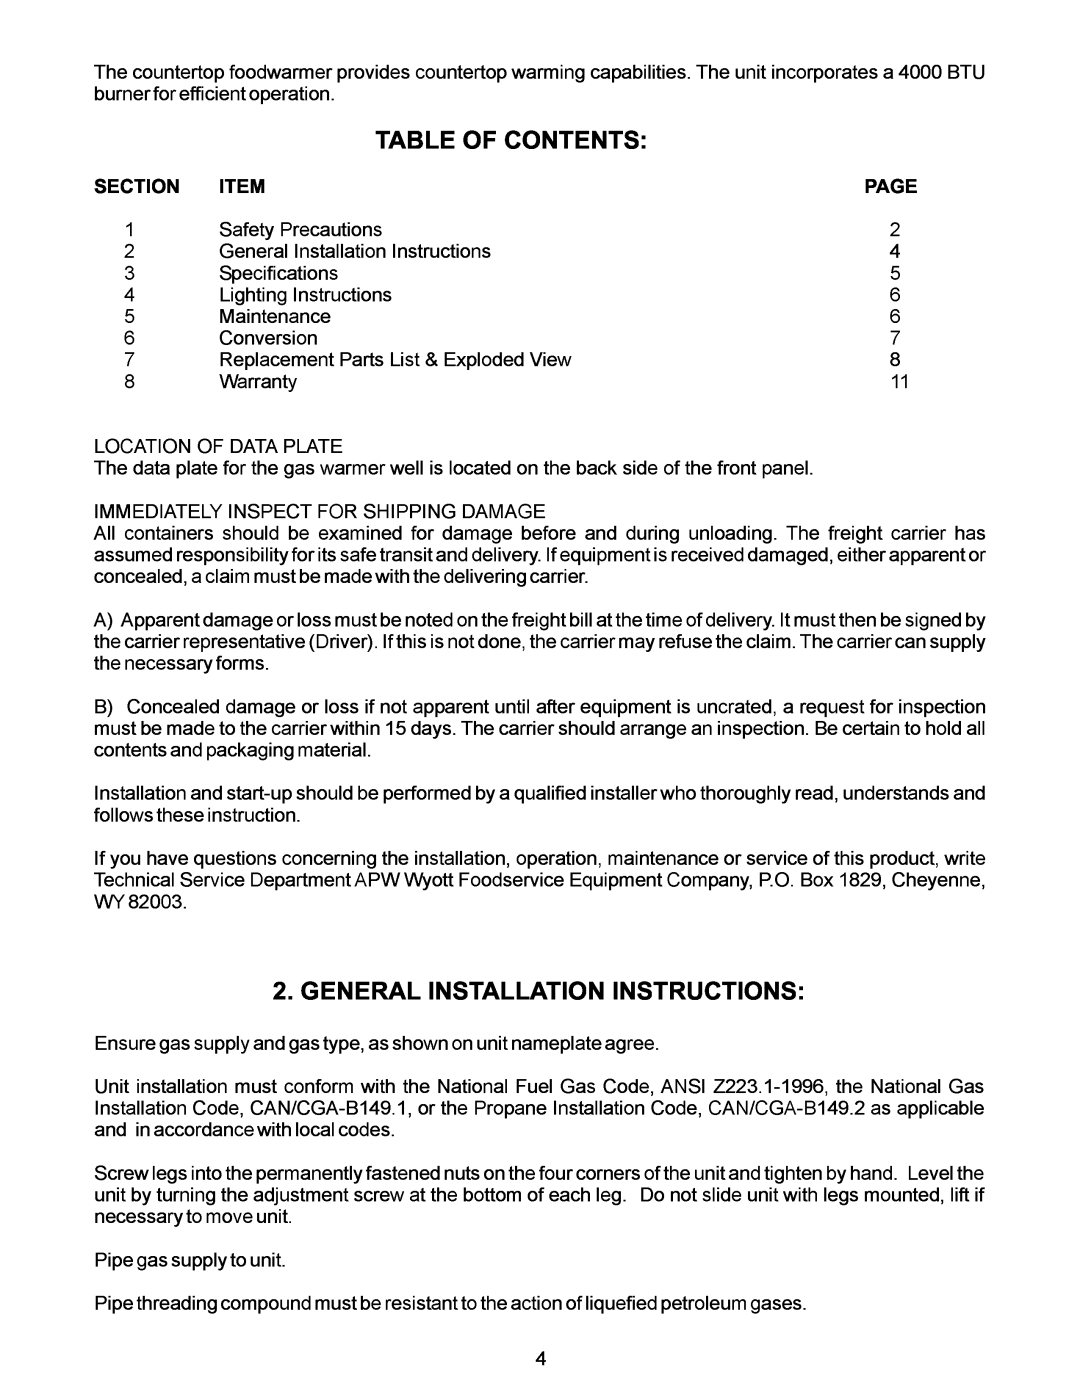 APW Wyott GWW installation instructions Table Of Contents, Eneral Installation Instructions, Section Item, Page 